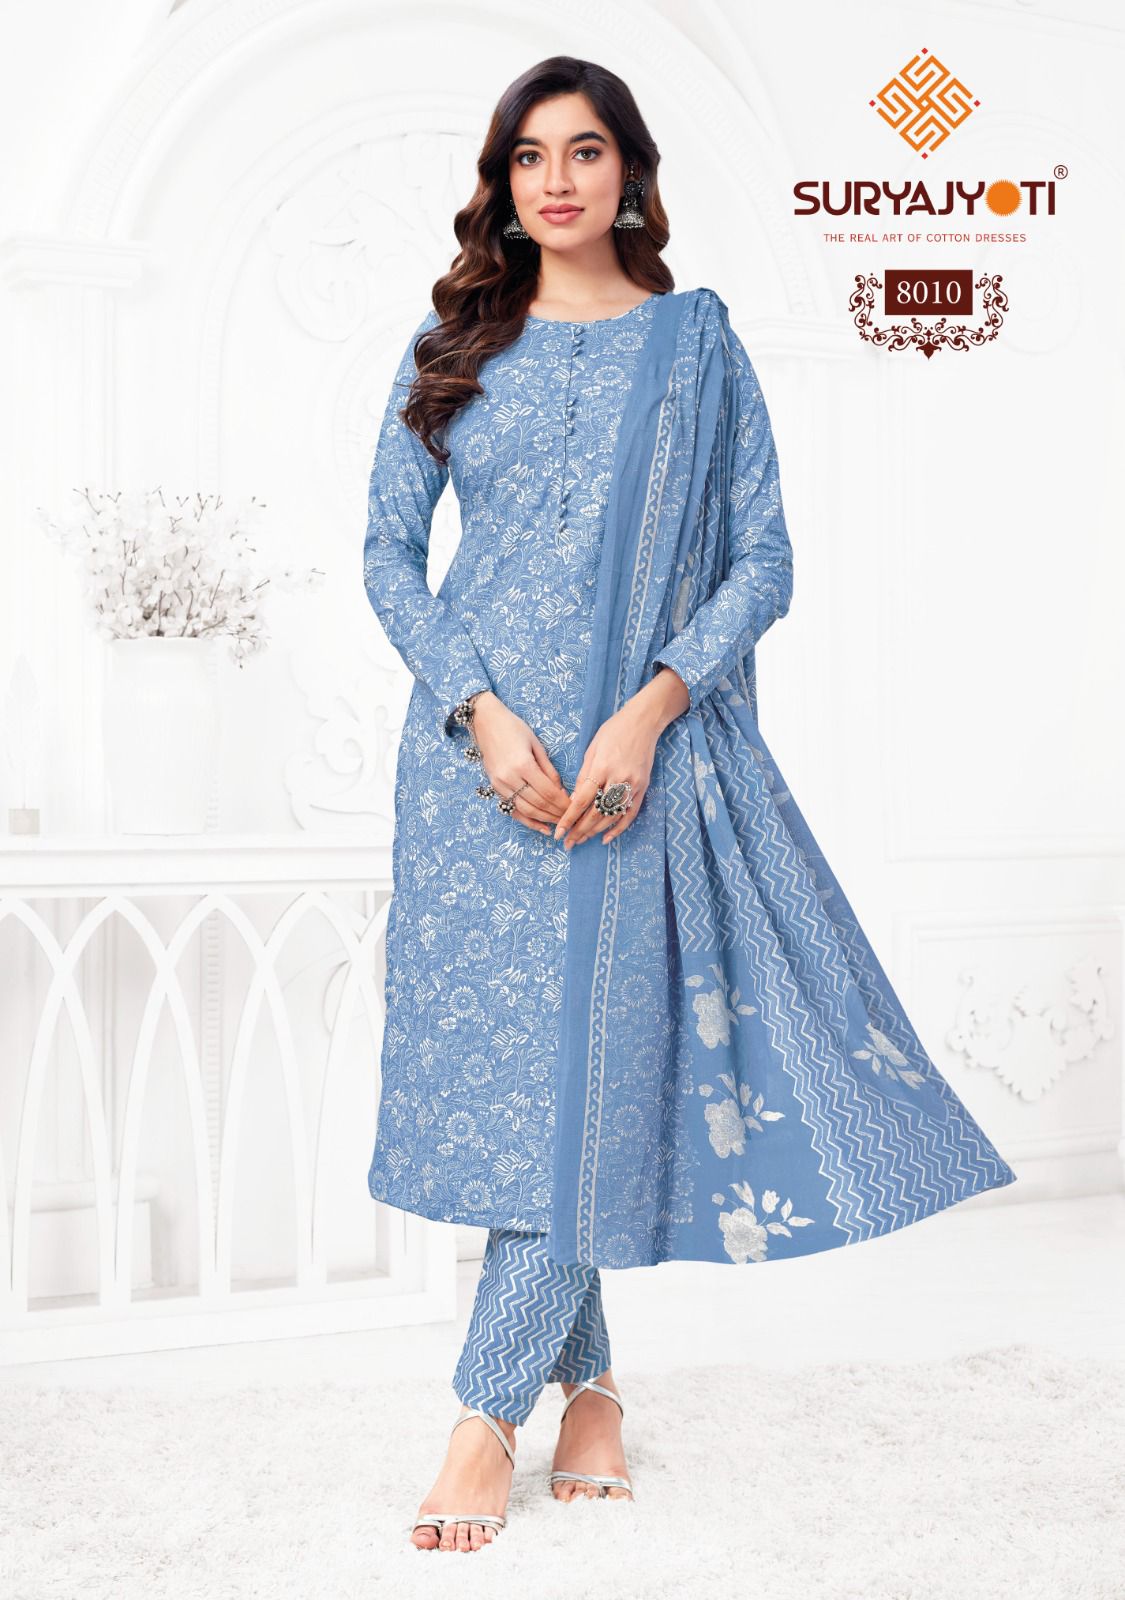 Preyasi Vol 8 Suryajyoti Cotton Readymade Pant Style Suits Wholesale